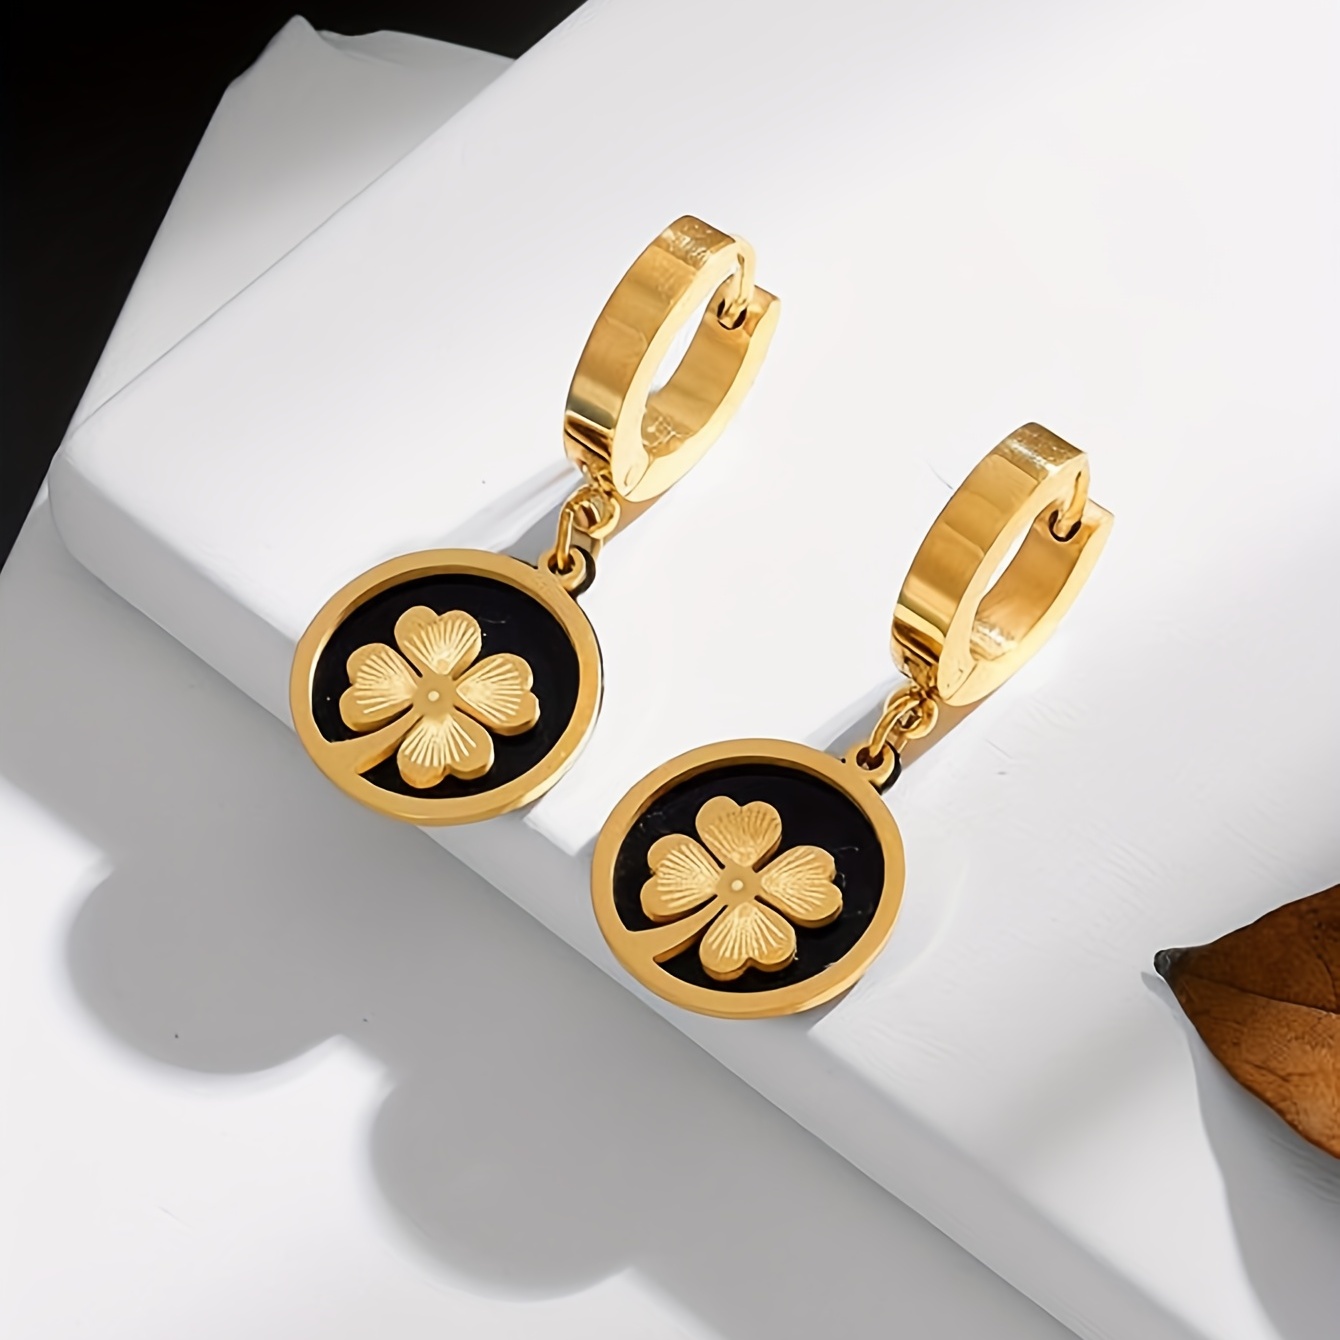 Lucky Clover Necklace, 18K Gold Plated - Van Cleef & Arpels Inspired Design